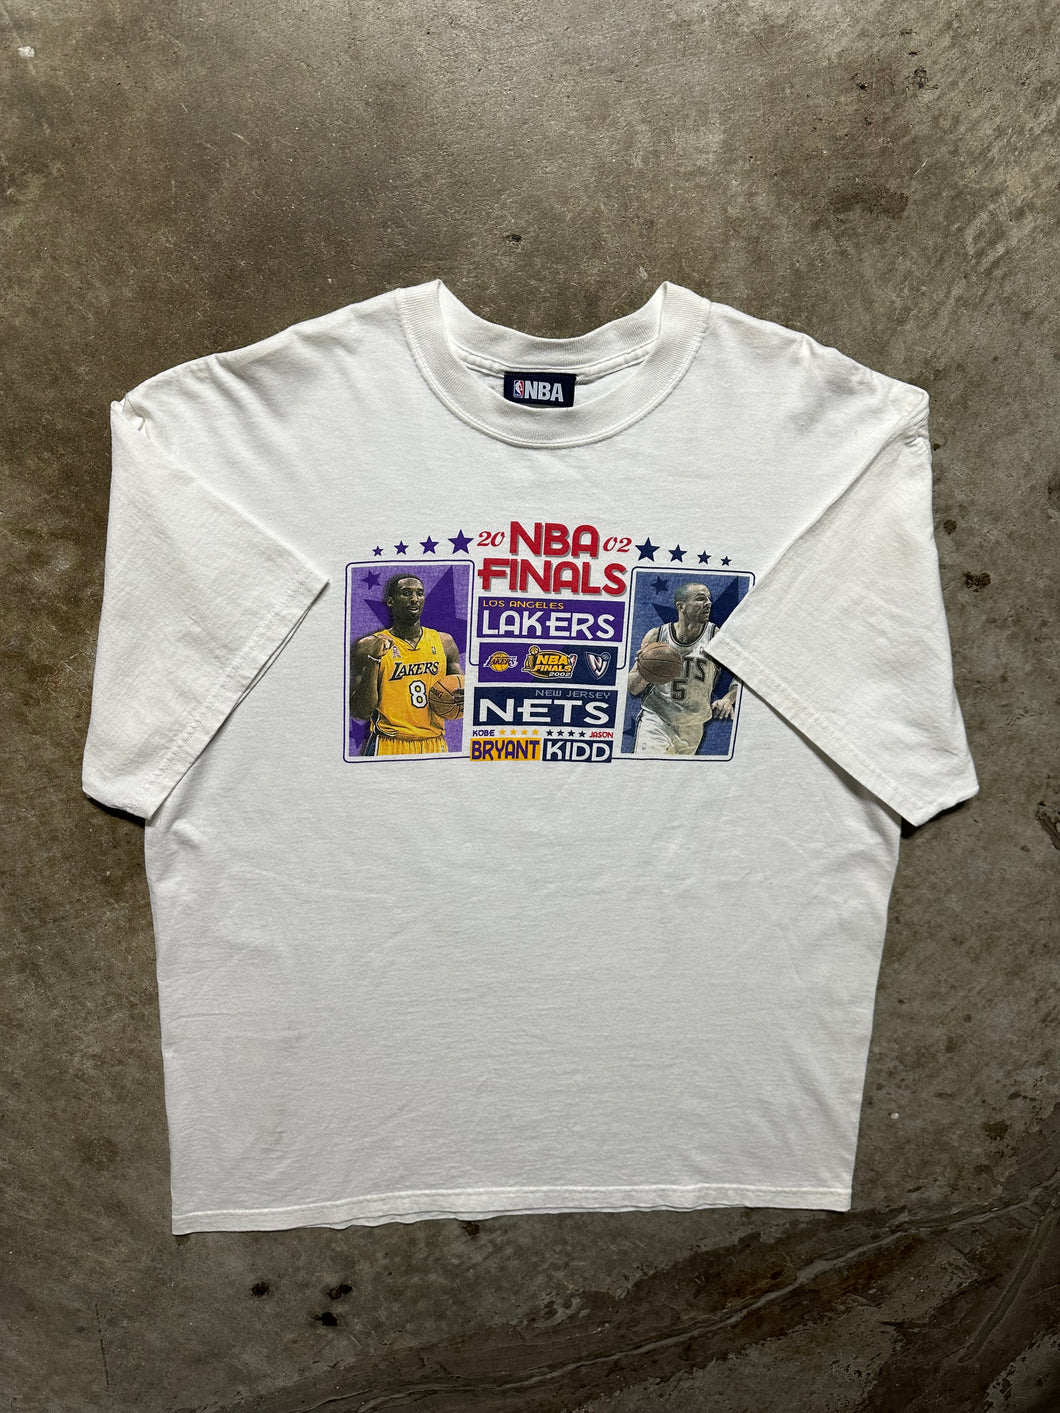 Vintage 2002 NBA Finals Lakers Nets Kobe vs Kidd Tee (XL)